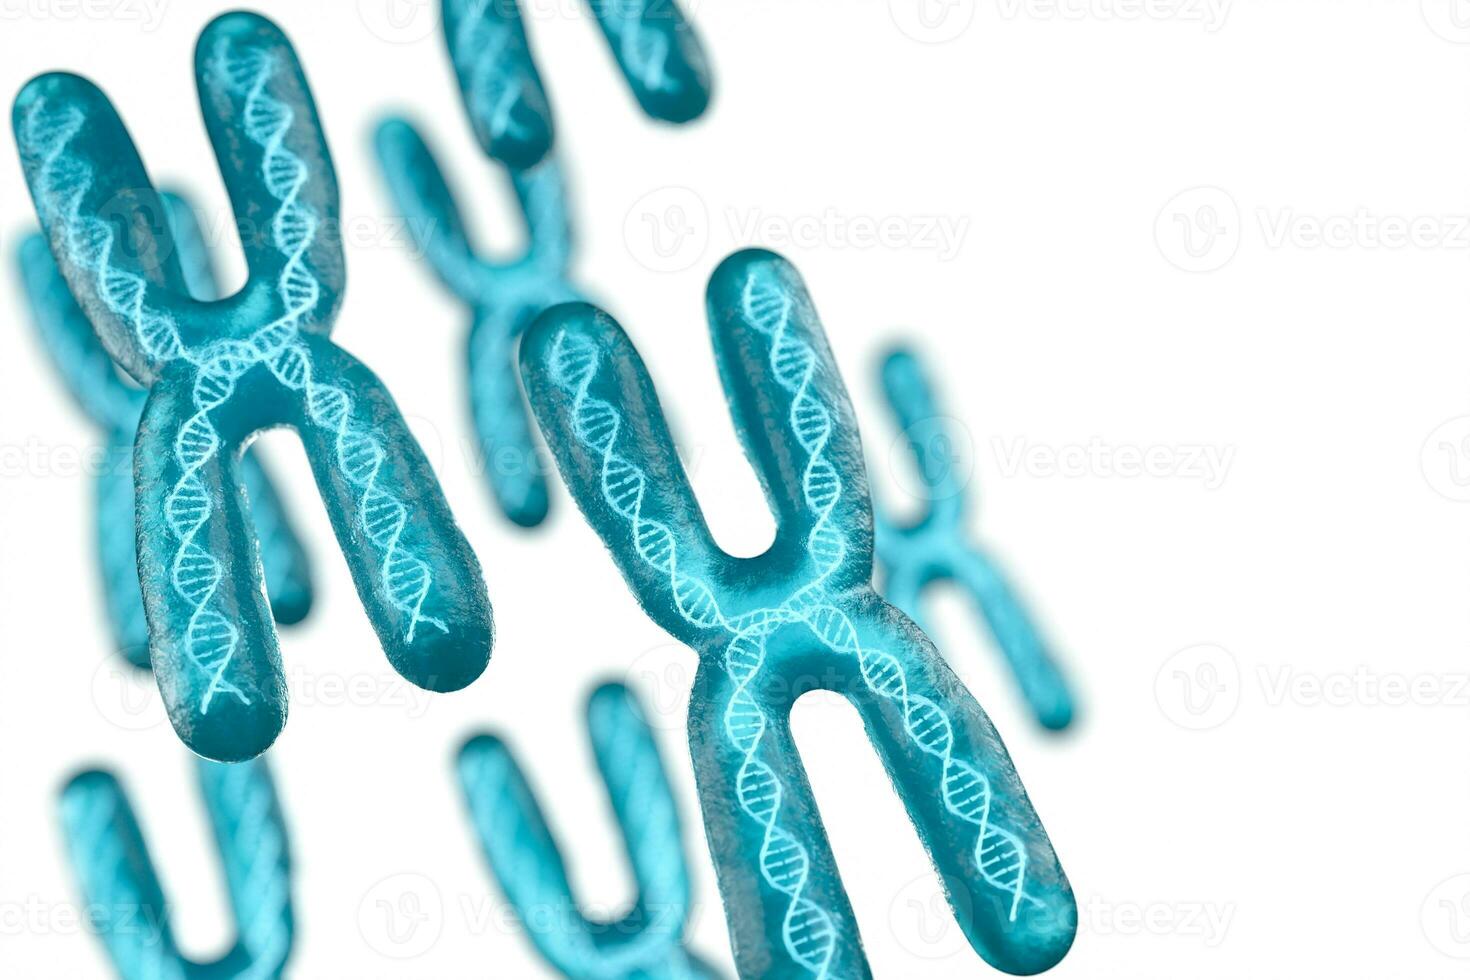 chromosoom met wit achtergrond, 3d weergave. foto